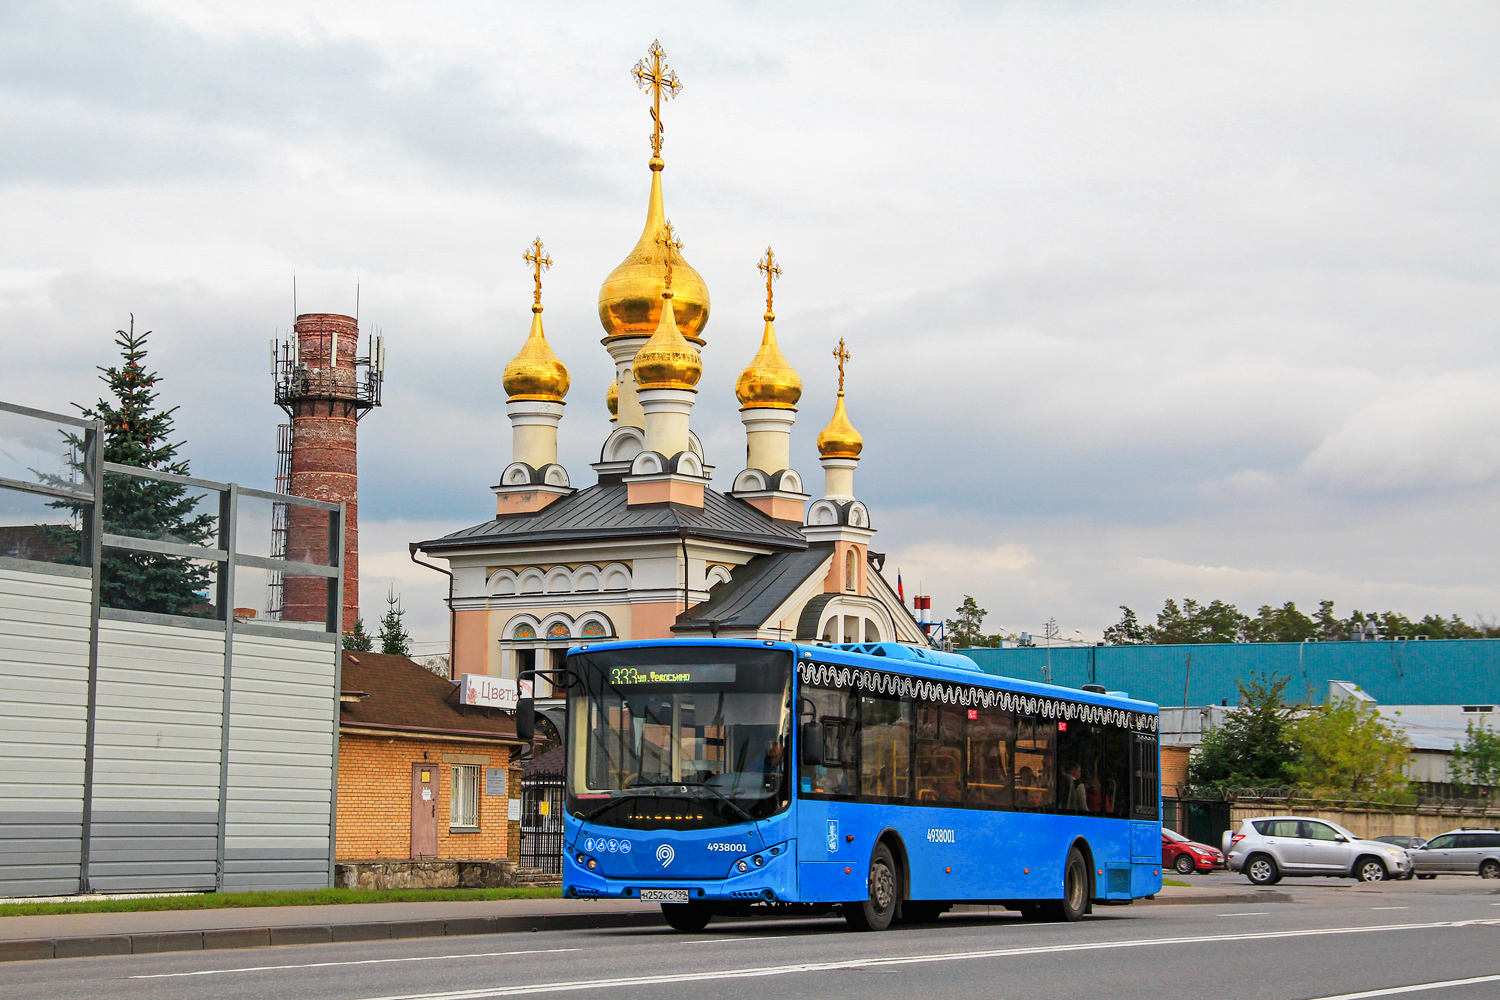 Moszkva, Volgabus-5270.02 sz.: 4938001